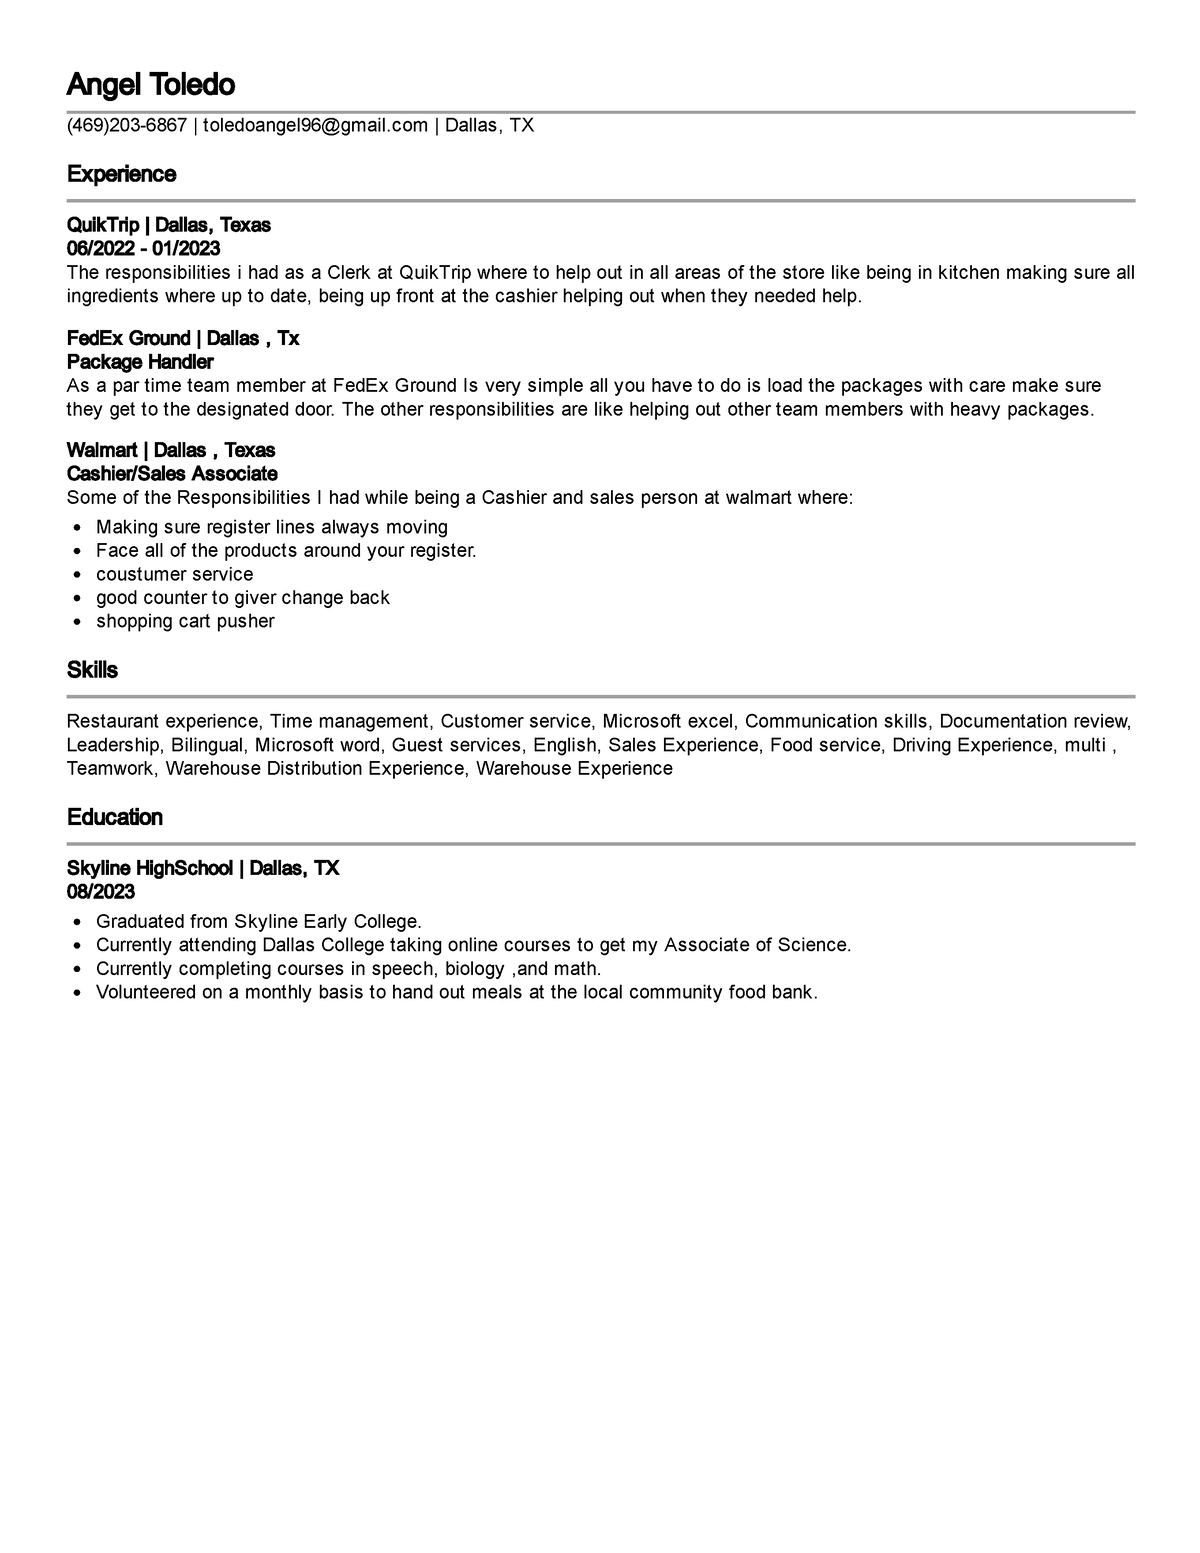 Job Resume Document Out From Laptop. Hands Holding Cv Resume Pap - Driveteks